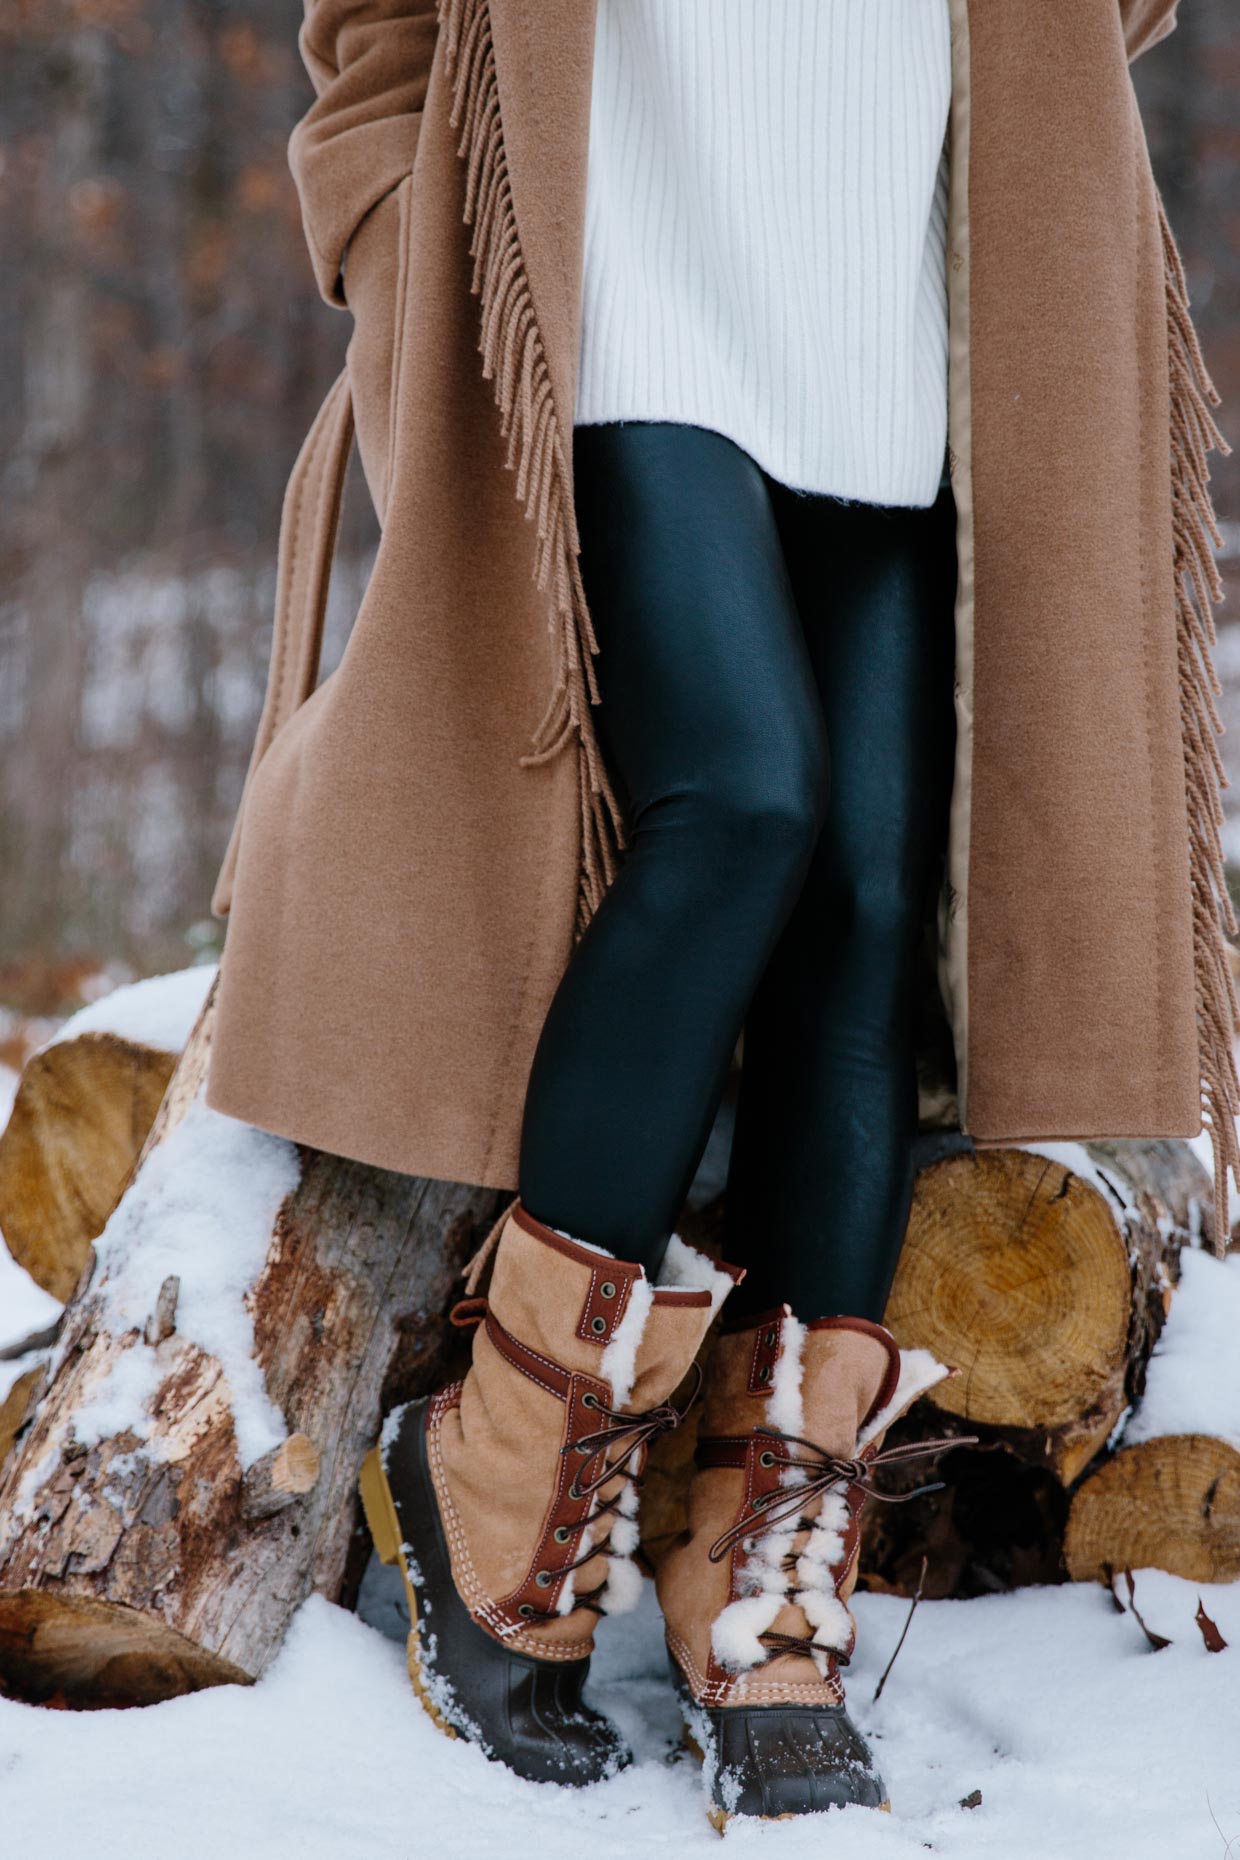 6 Winter Wardrobe Essentials Every Woman Should Own - Meagan's Moda